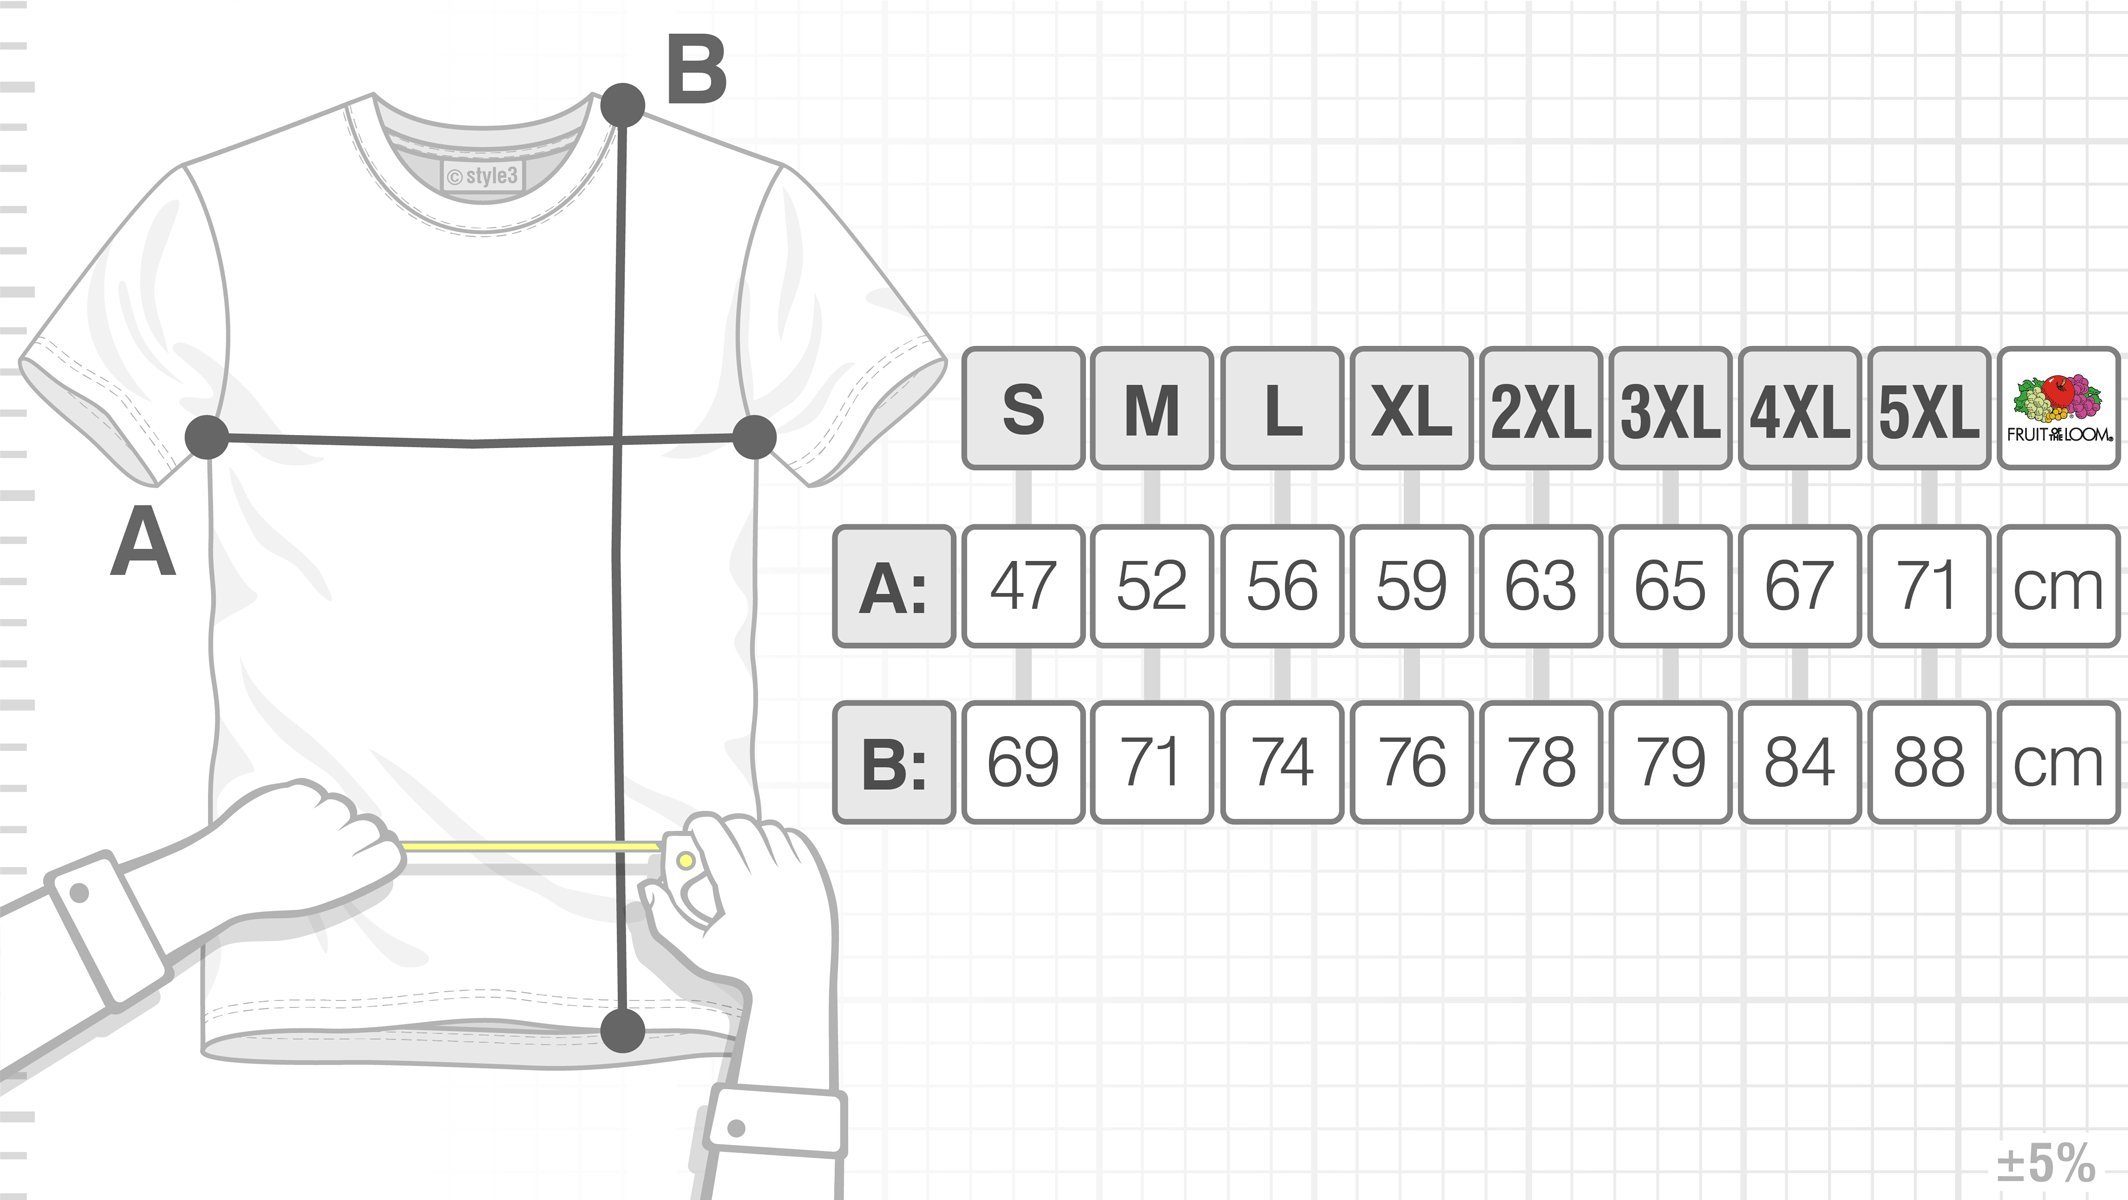 geo Dreieck Penrose T-Shirt Bang Escher Cooper Big Herren Print-Shirt schwarz style3 Sheldon Theory Würfel